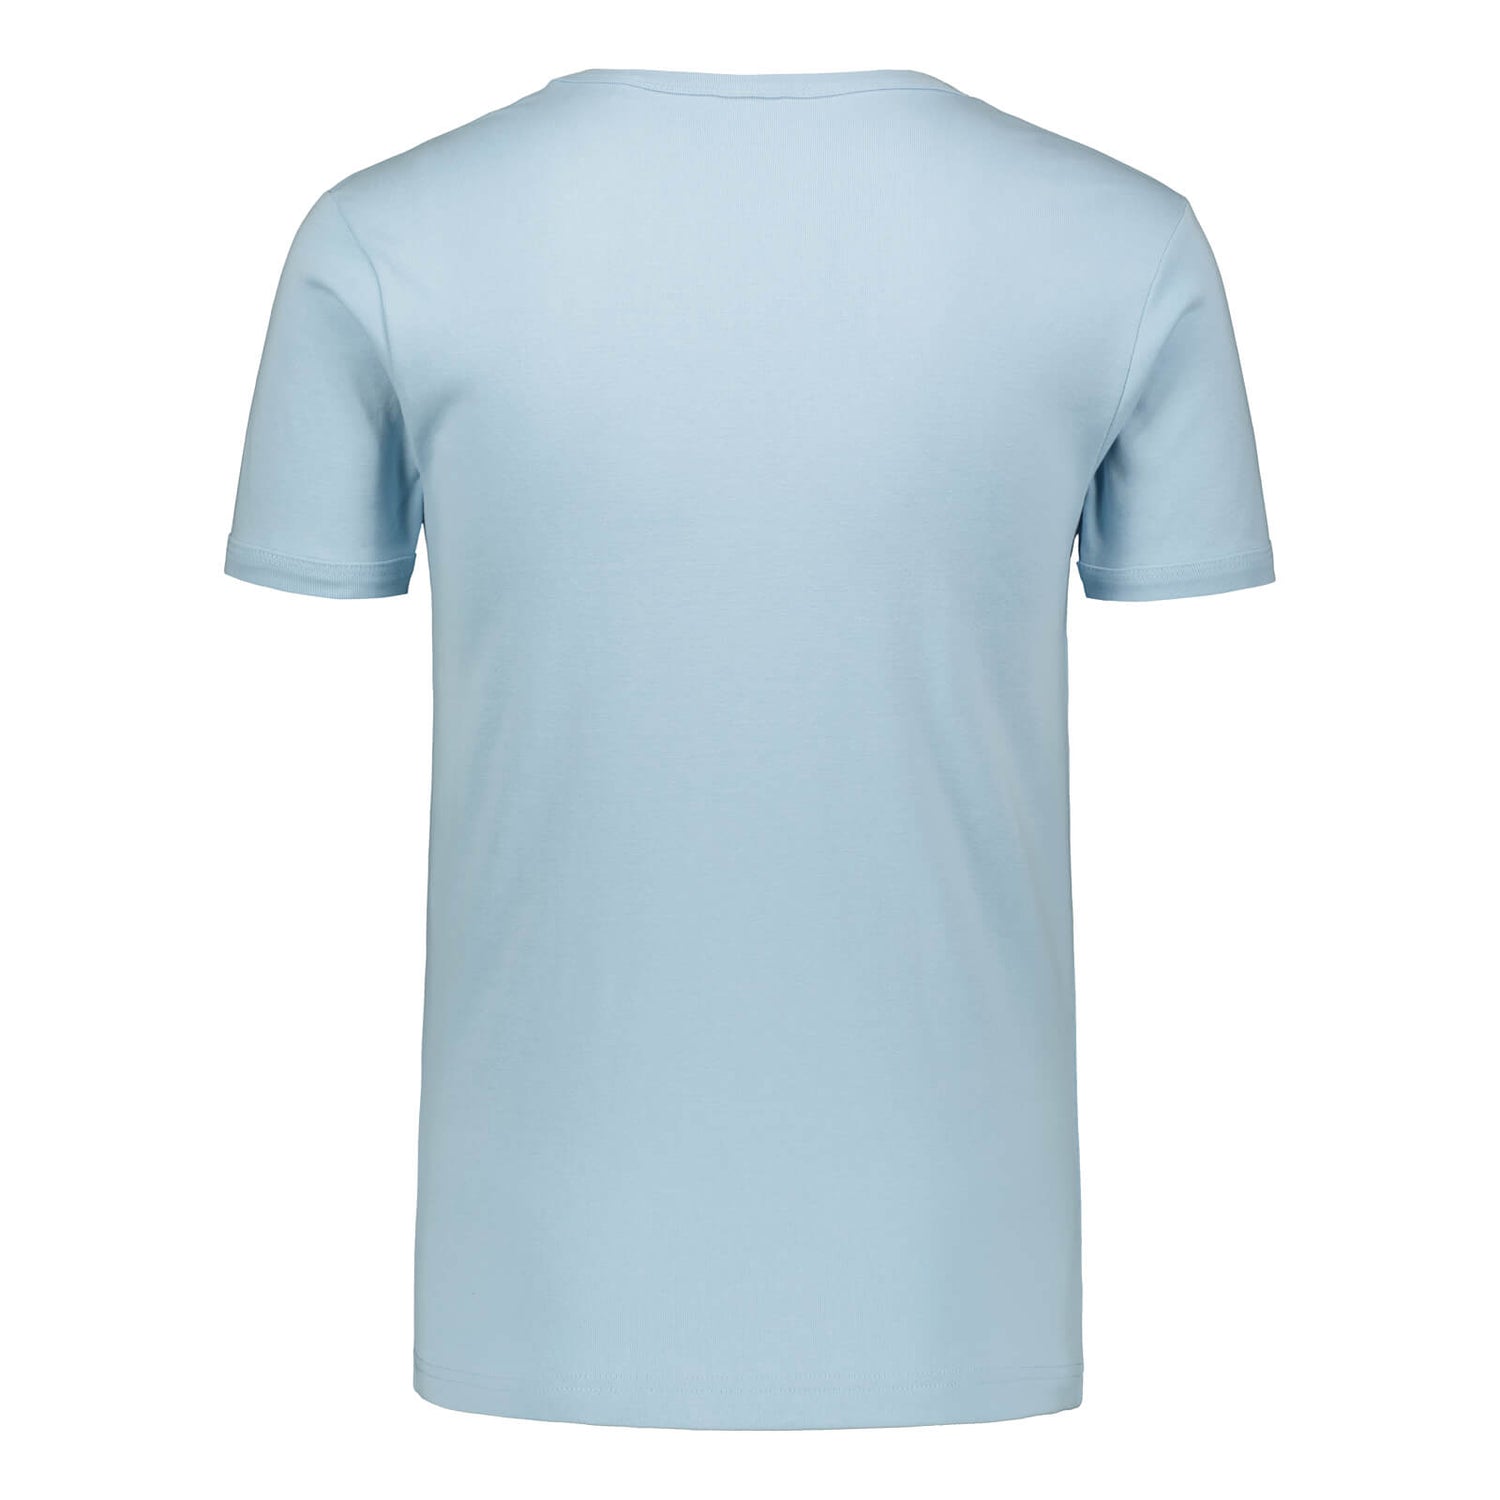 Bubi Organic Cotton T-shirt, Sky Blue